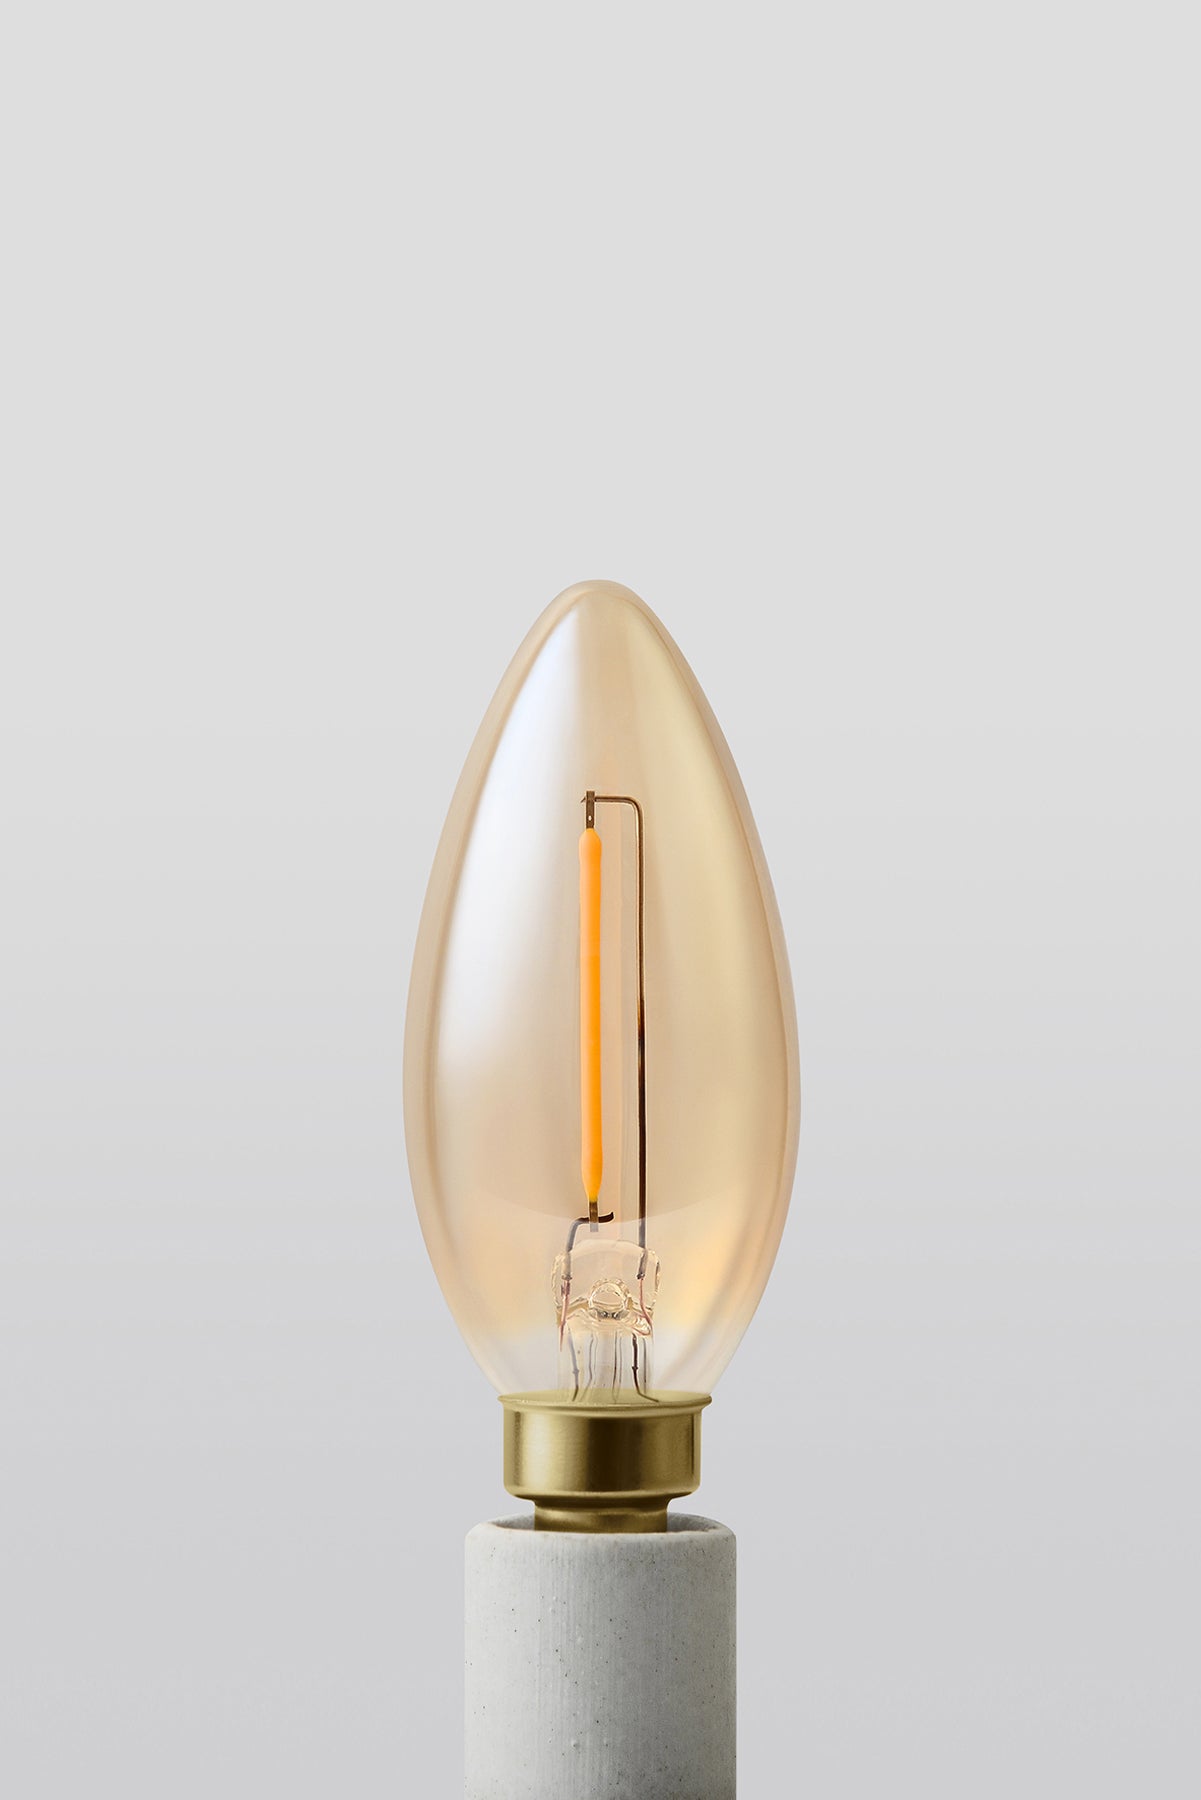 Modern candelabra LED light bulb with warm vintage Edison style glow